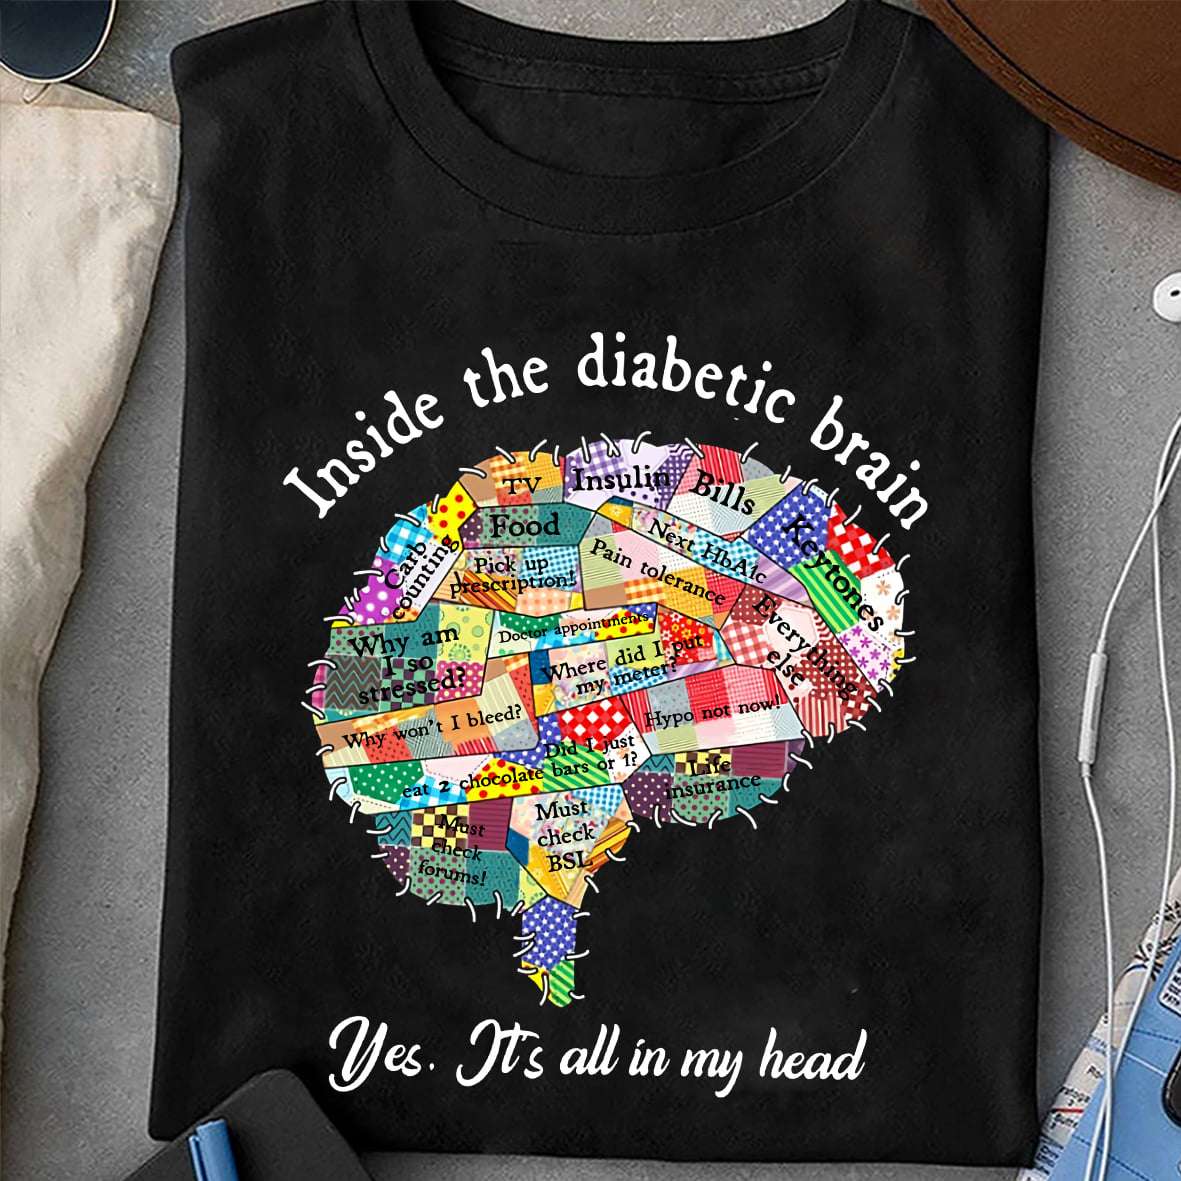 Inside the diabetic brain - Diabete awareness, pain tolerance